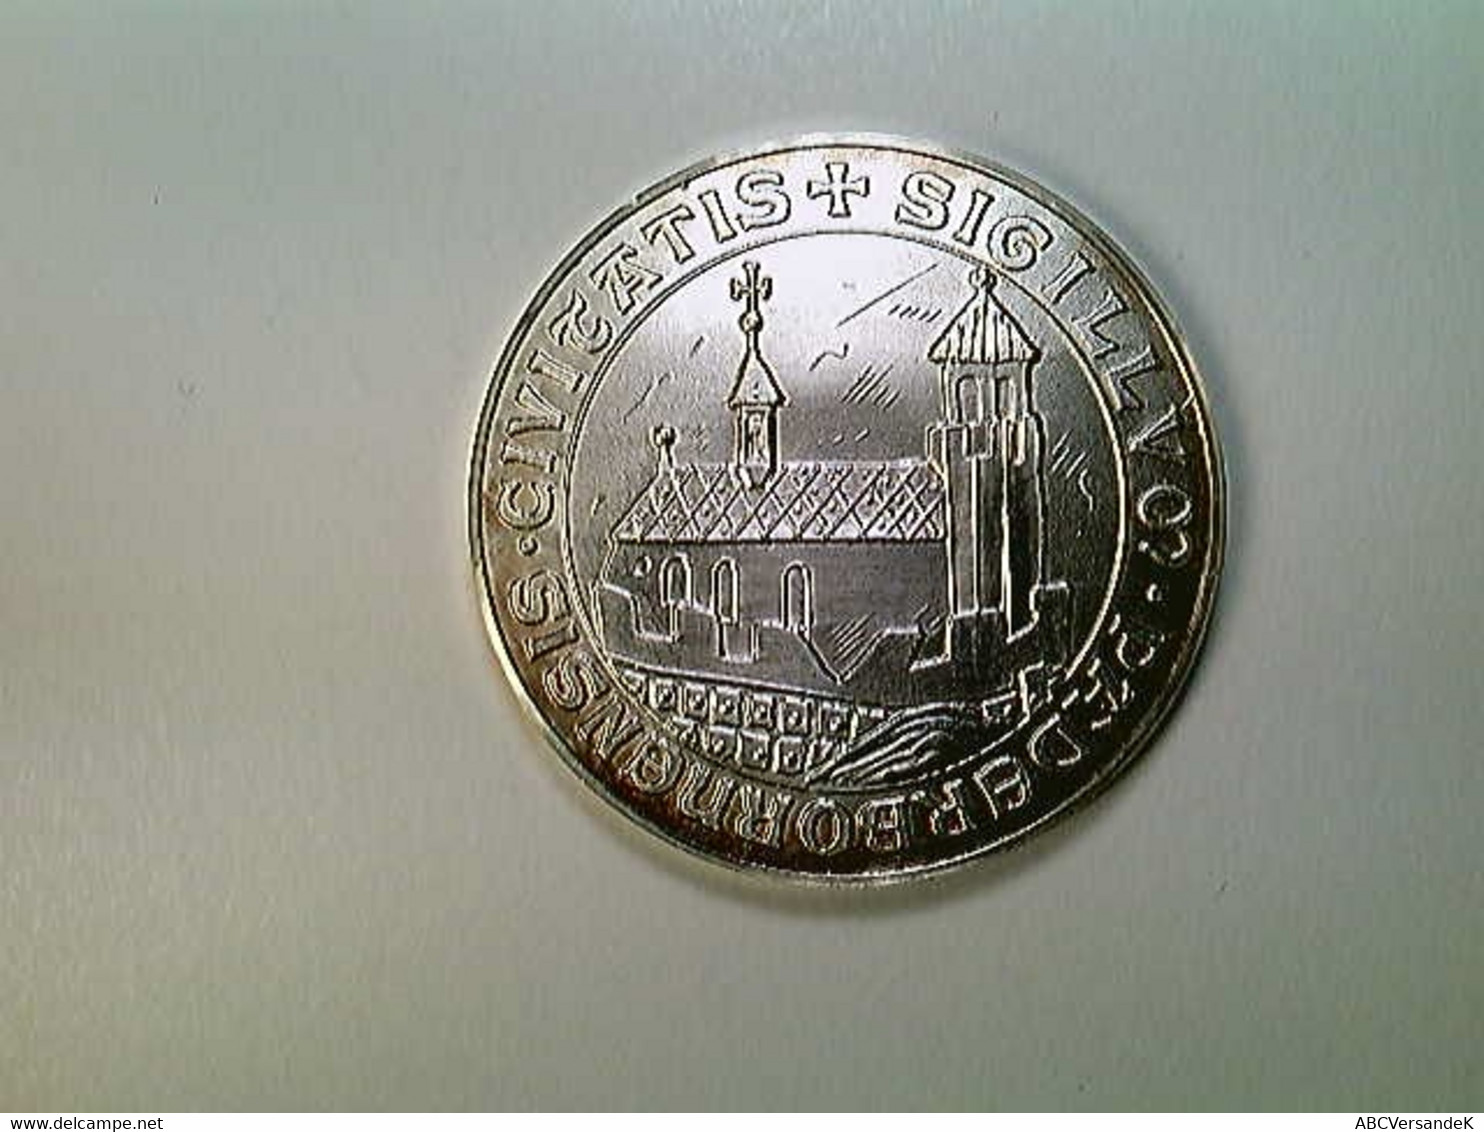 Medaille Paderborn 1650 Nach Merian, 40 Mm, 30 Gr., Silber, SELTEN! - Numismática